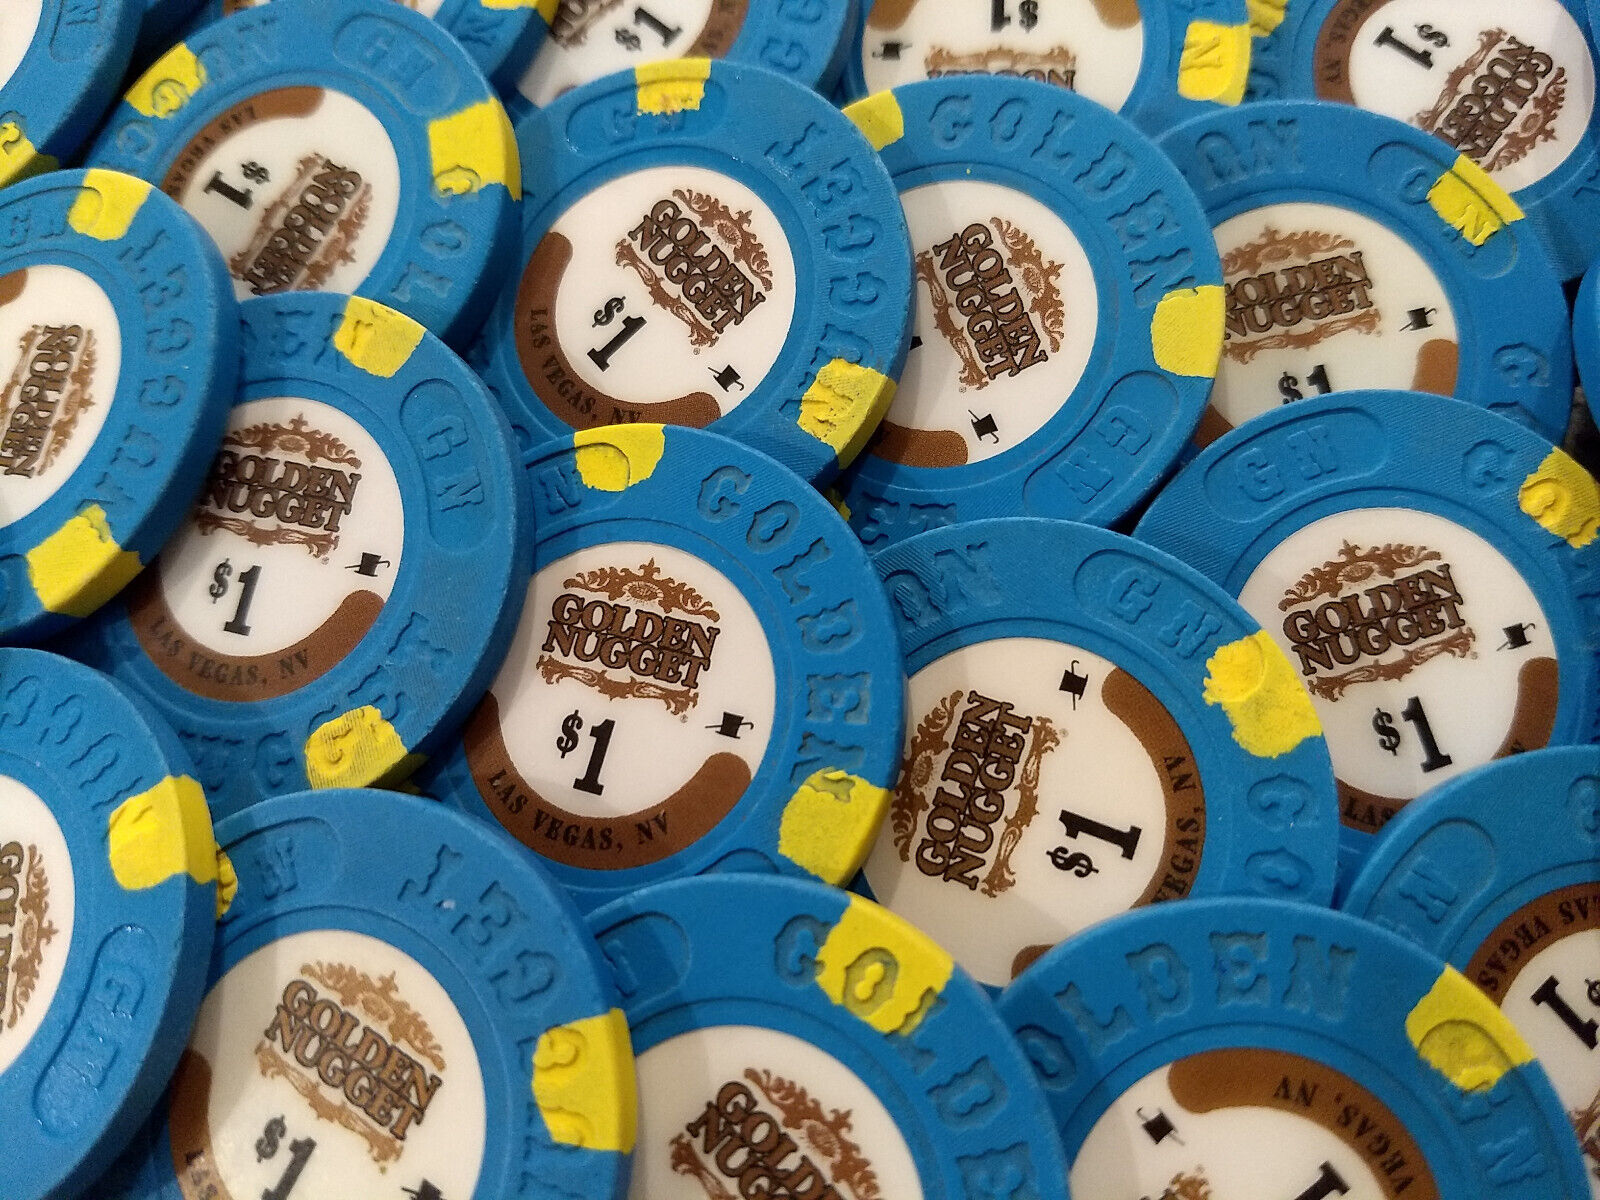 100 Golden Nugget Hotel Casino Las Vegas. $1 poker gaming chips. Paulson Top Hat